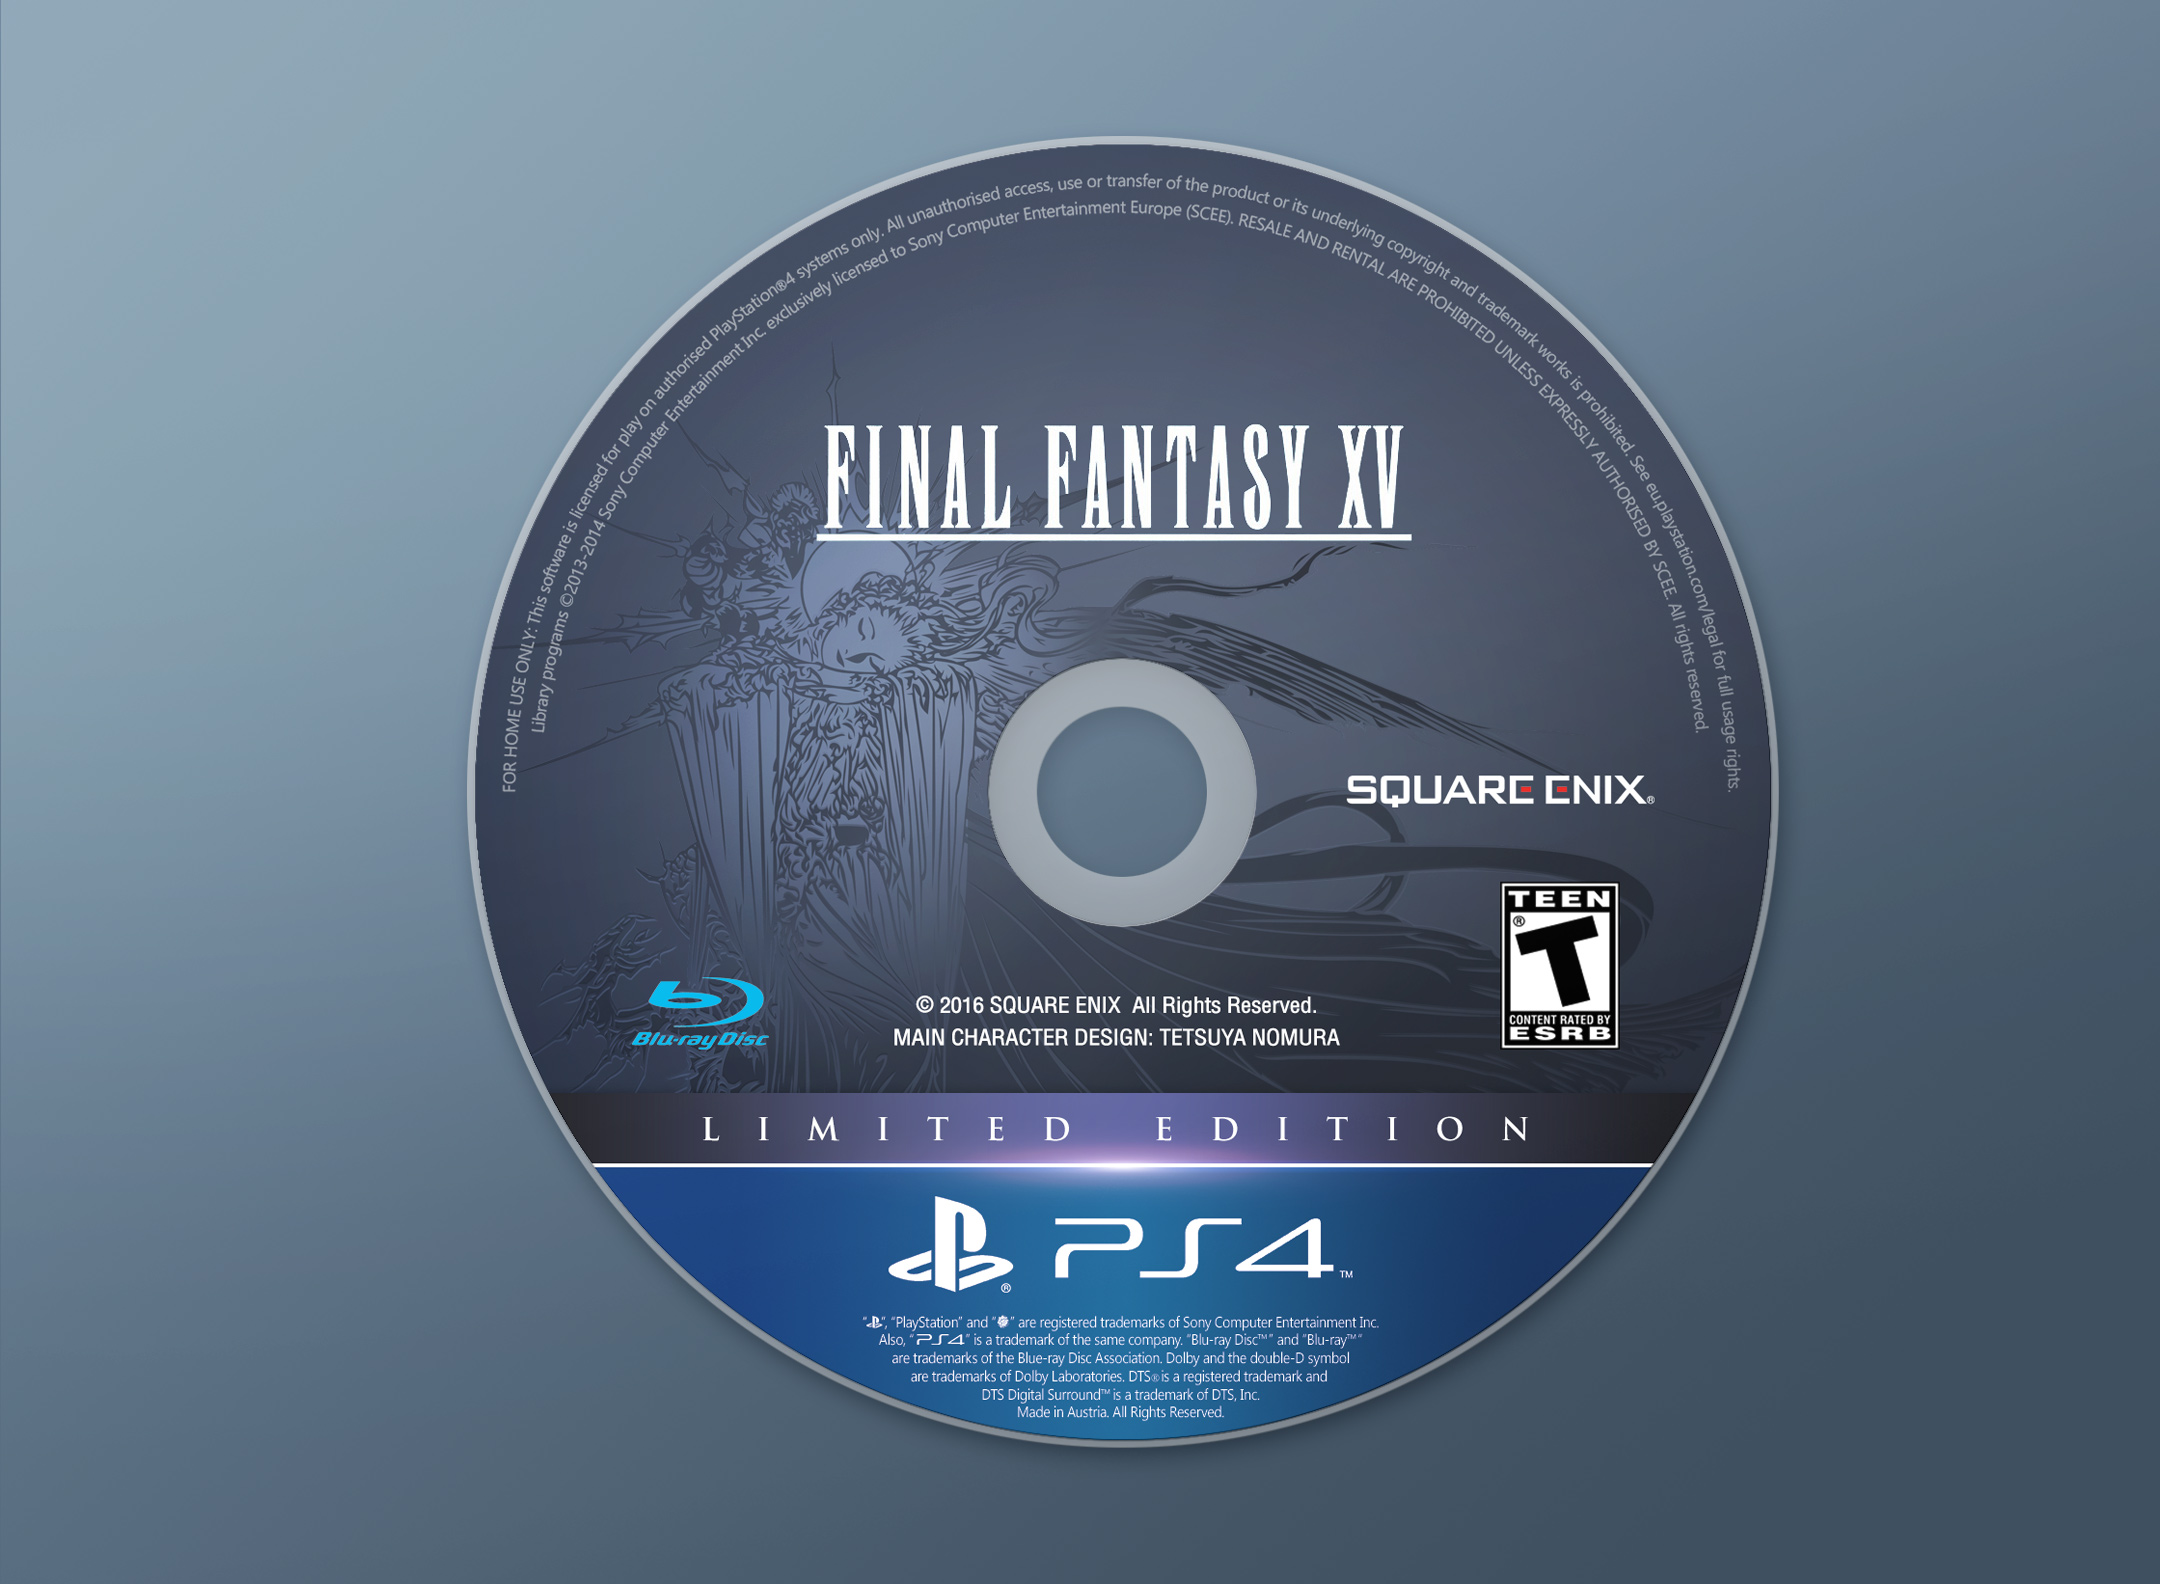 Диска final fantasy. LBCR abyfk a'yntpb 15 GC 4. Final Fantasy 15 ps4 диск. Final Fantasy XV Sony ps4 диск. Final Fantasy XV диск.